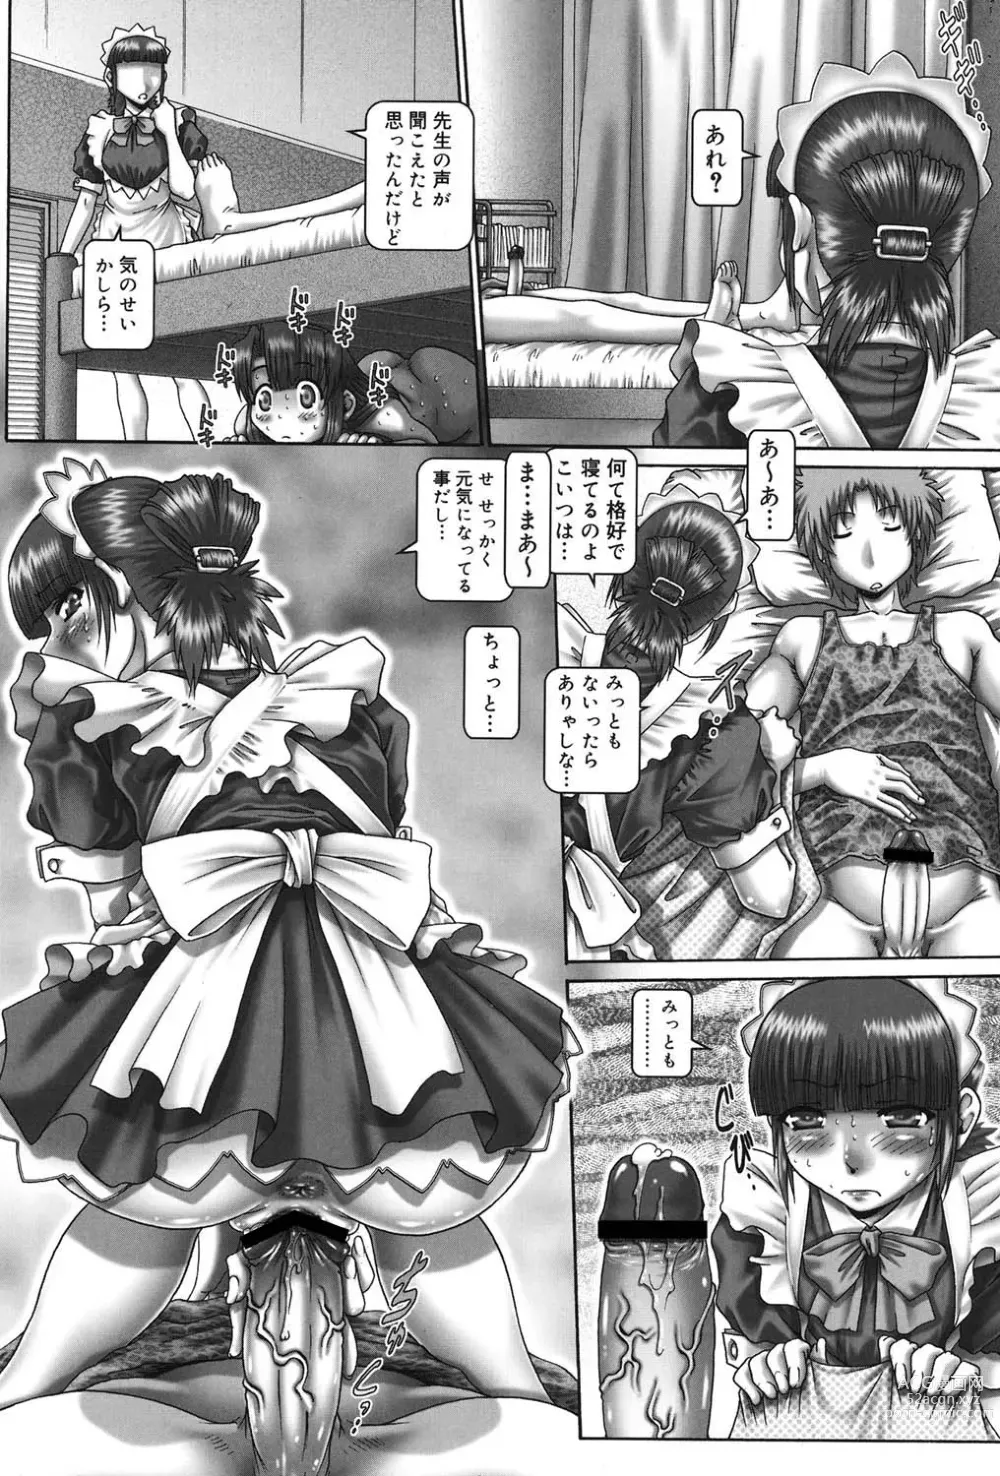 Page 208 of manga Maid in Teacher